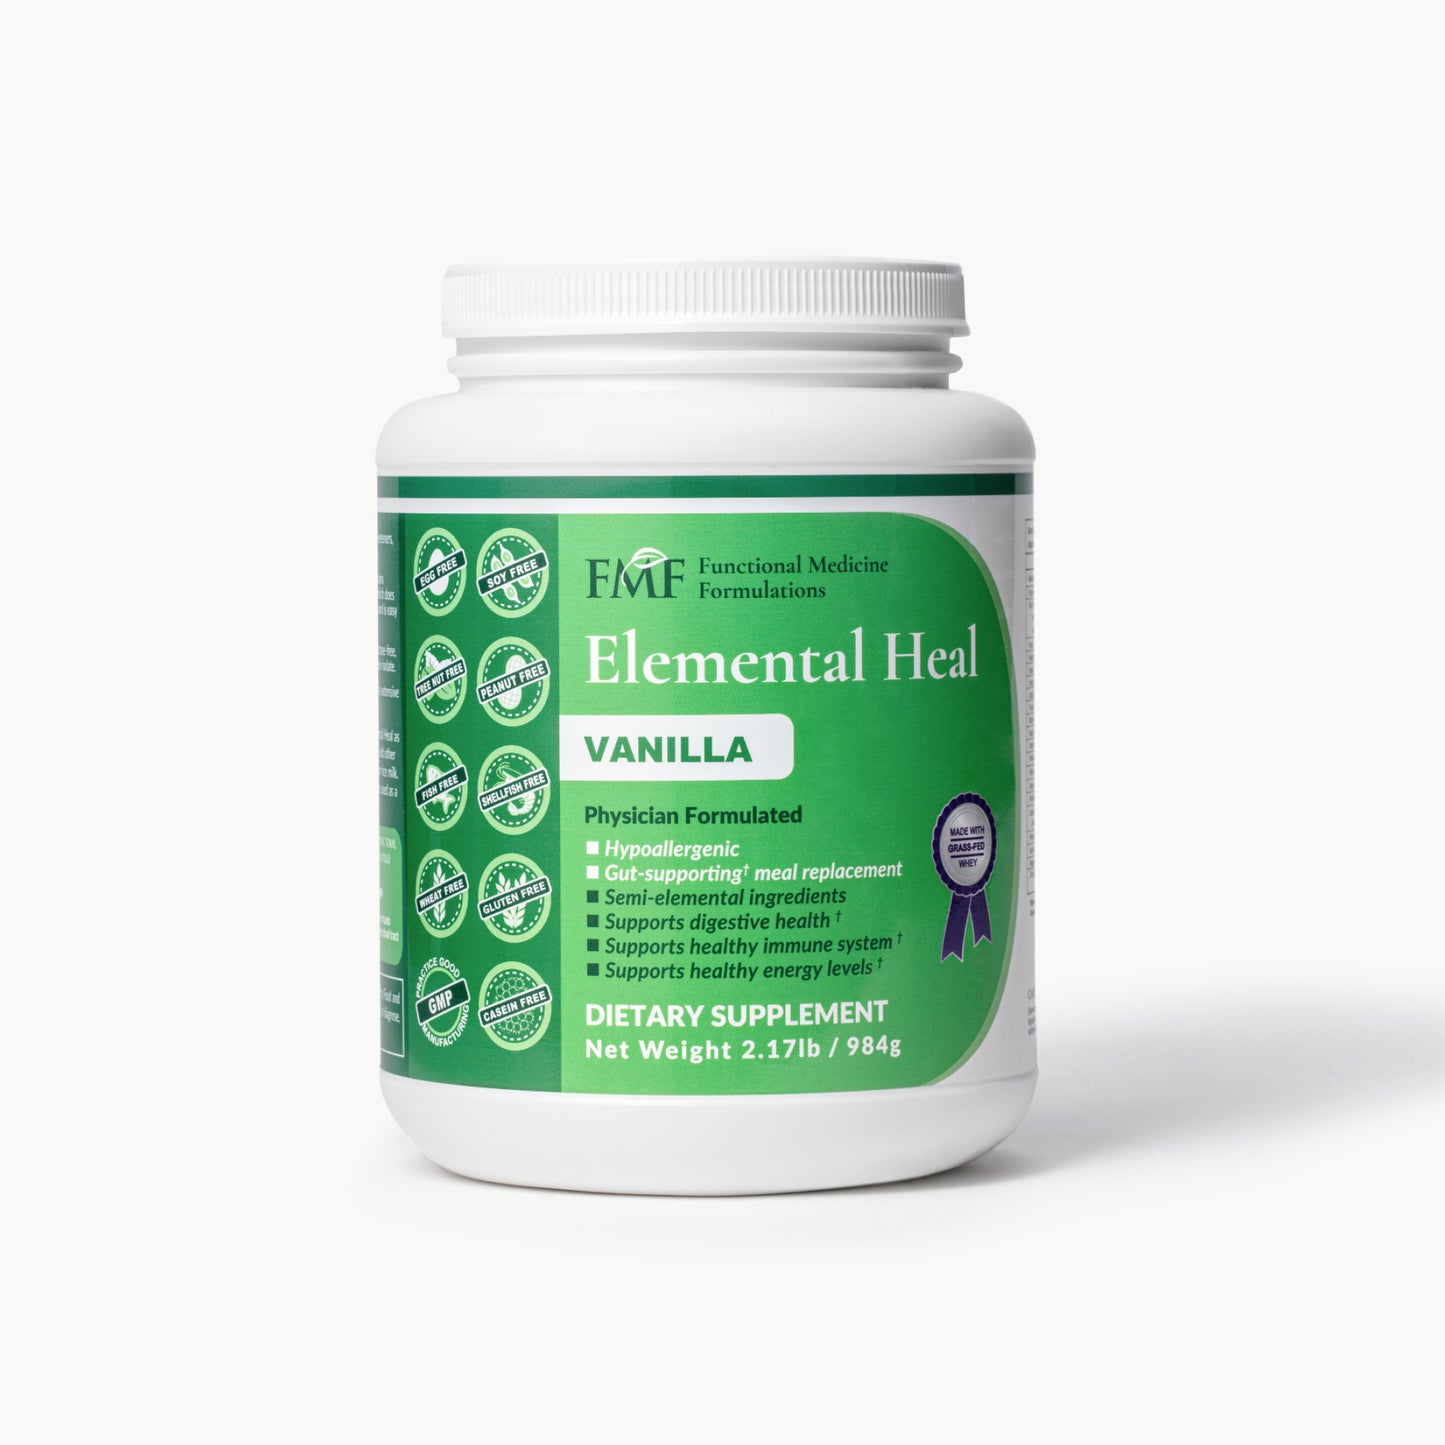 Elemental Heal